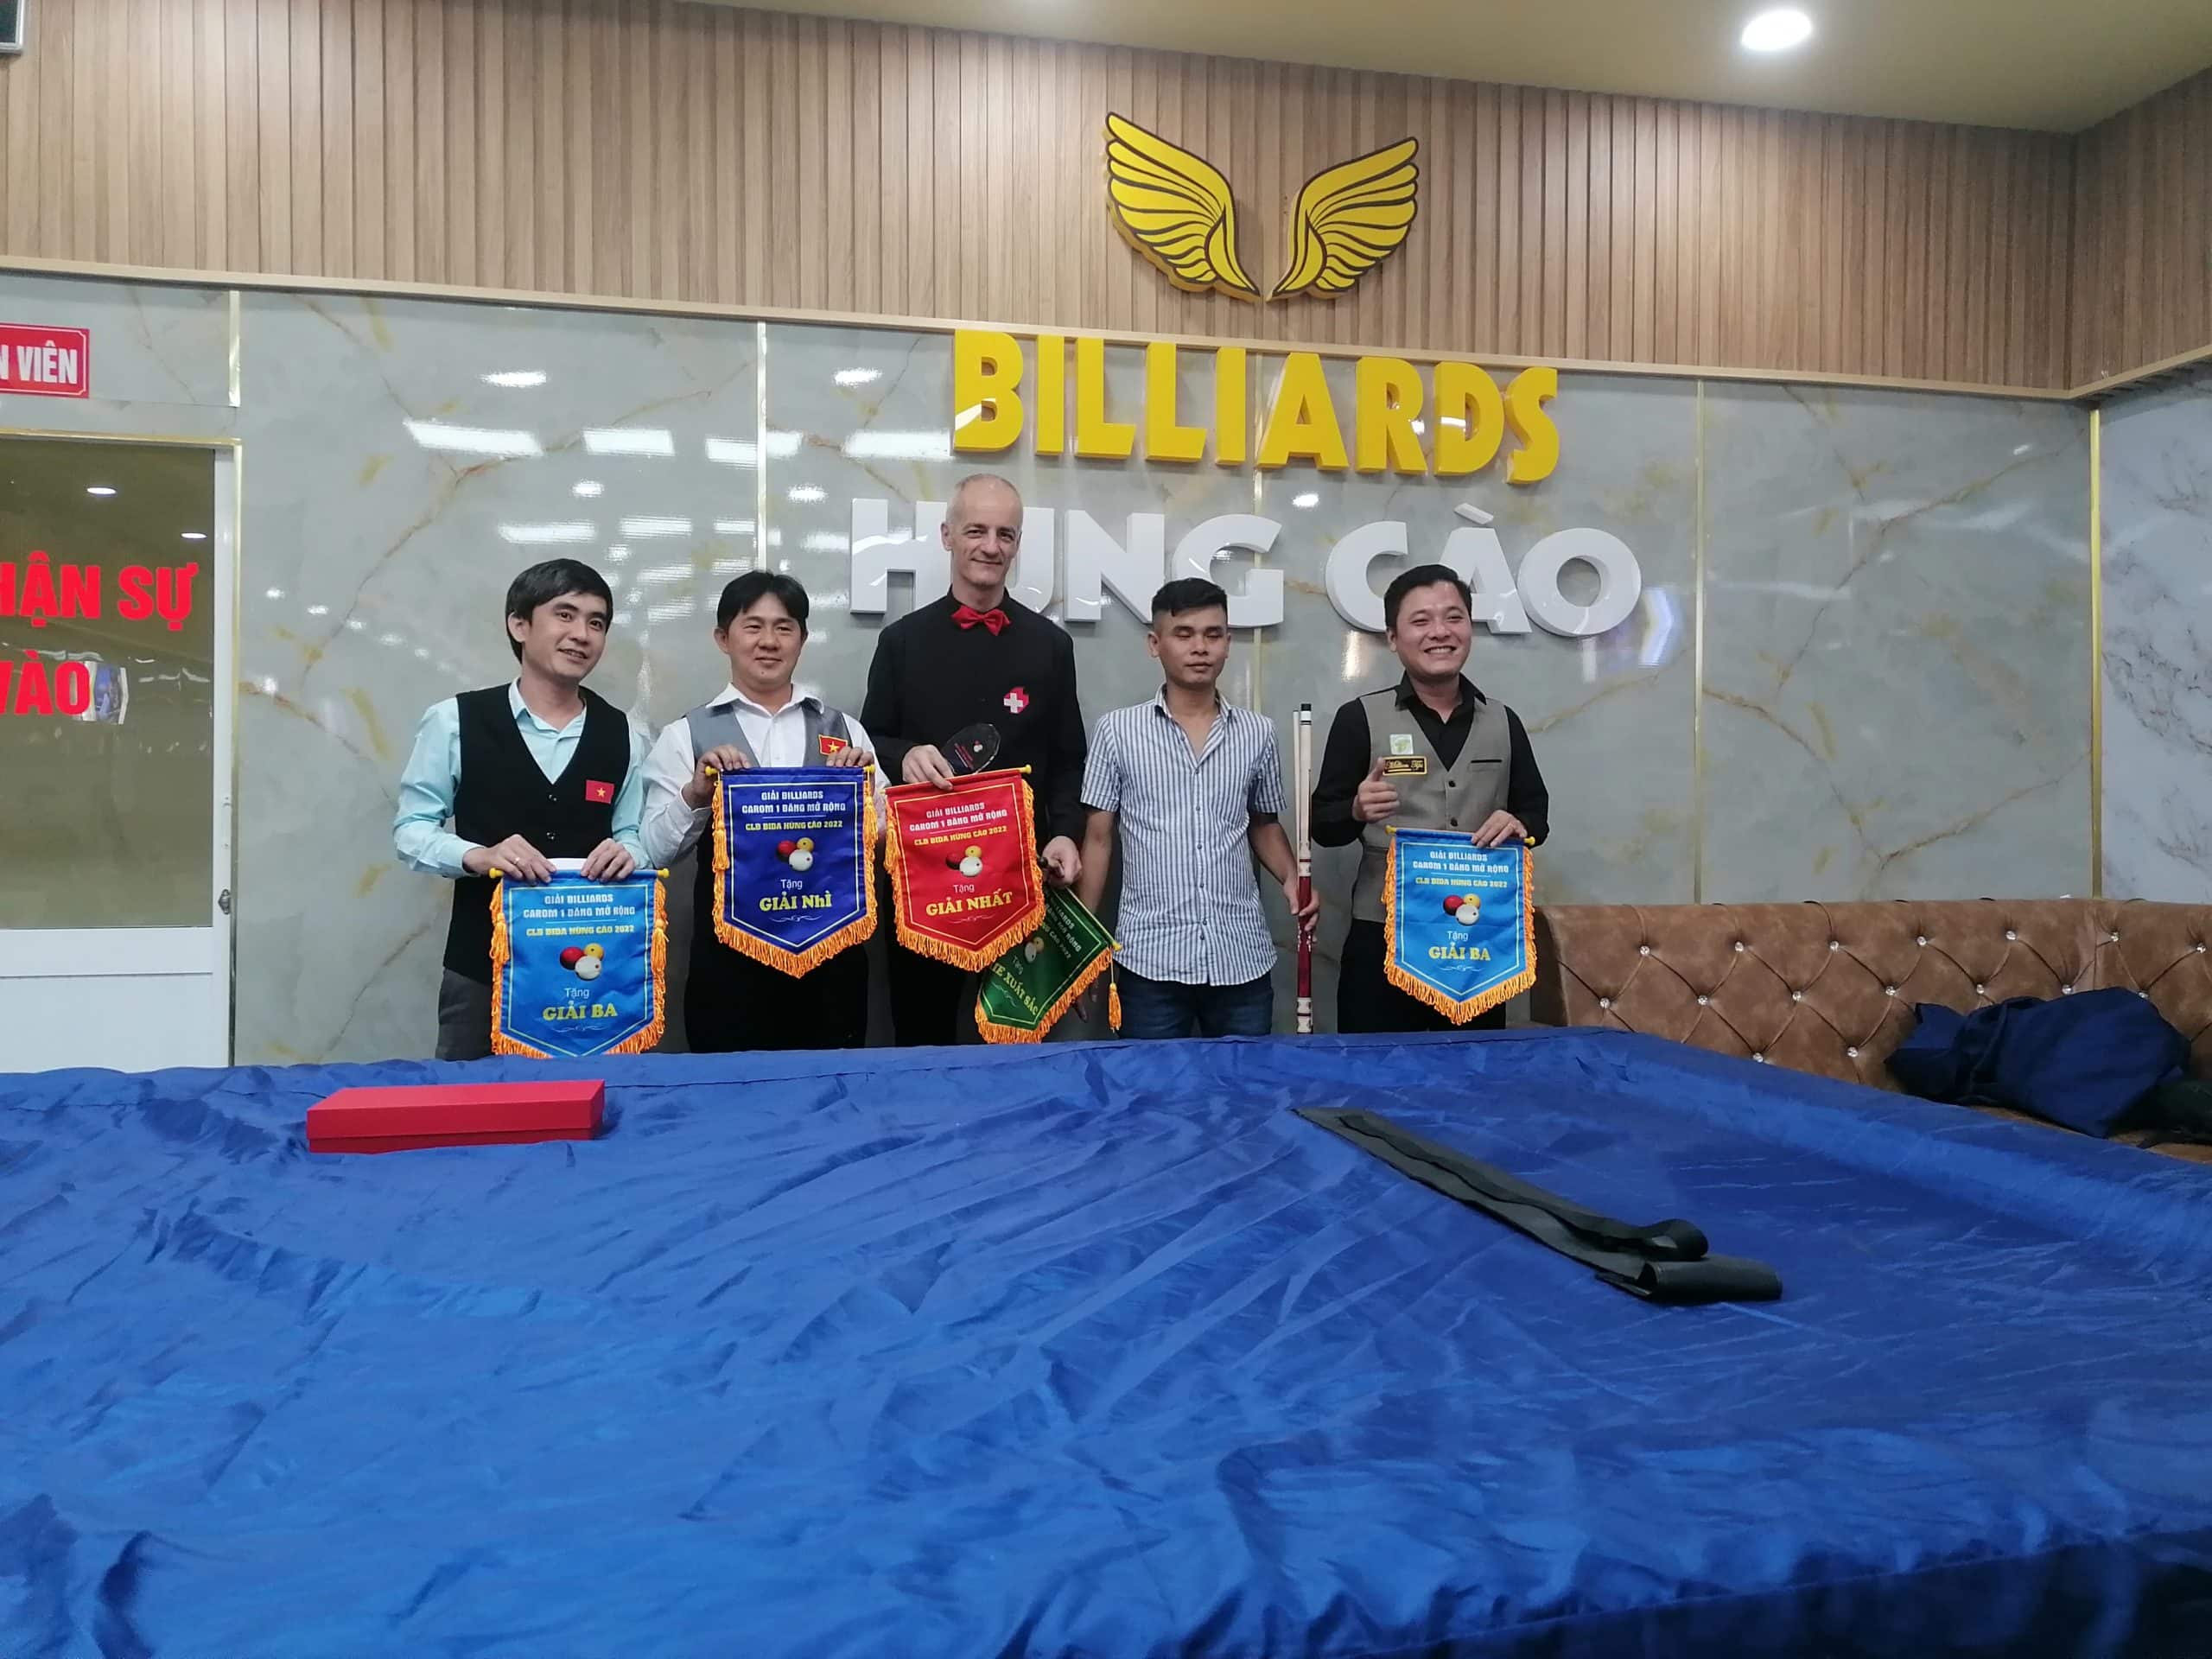 Vietnam – Tournoi à la bande au Billiard Club Hung Cao